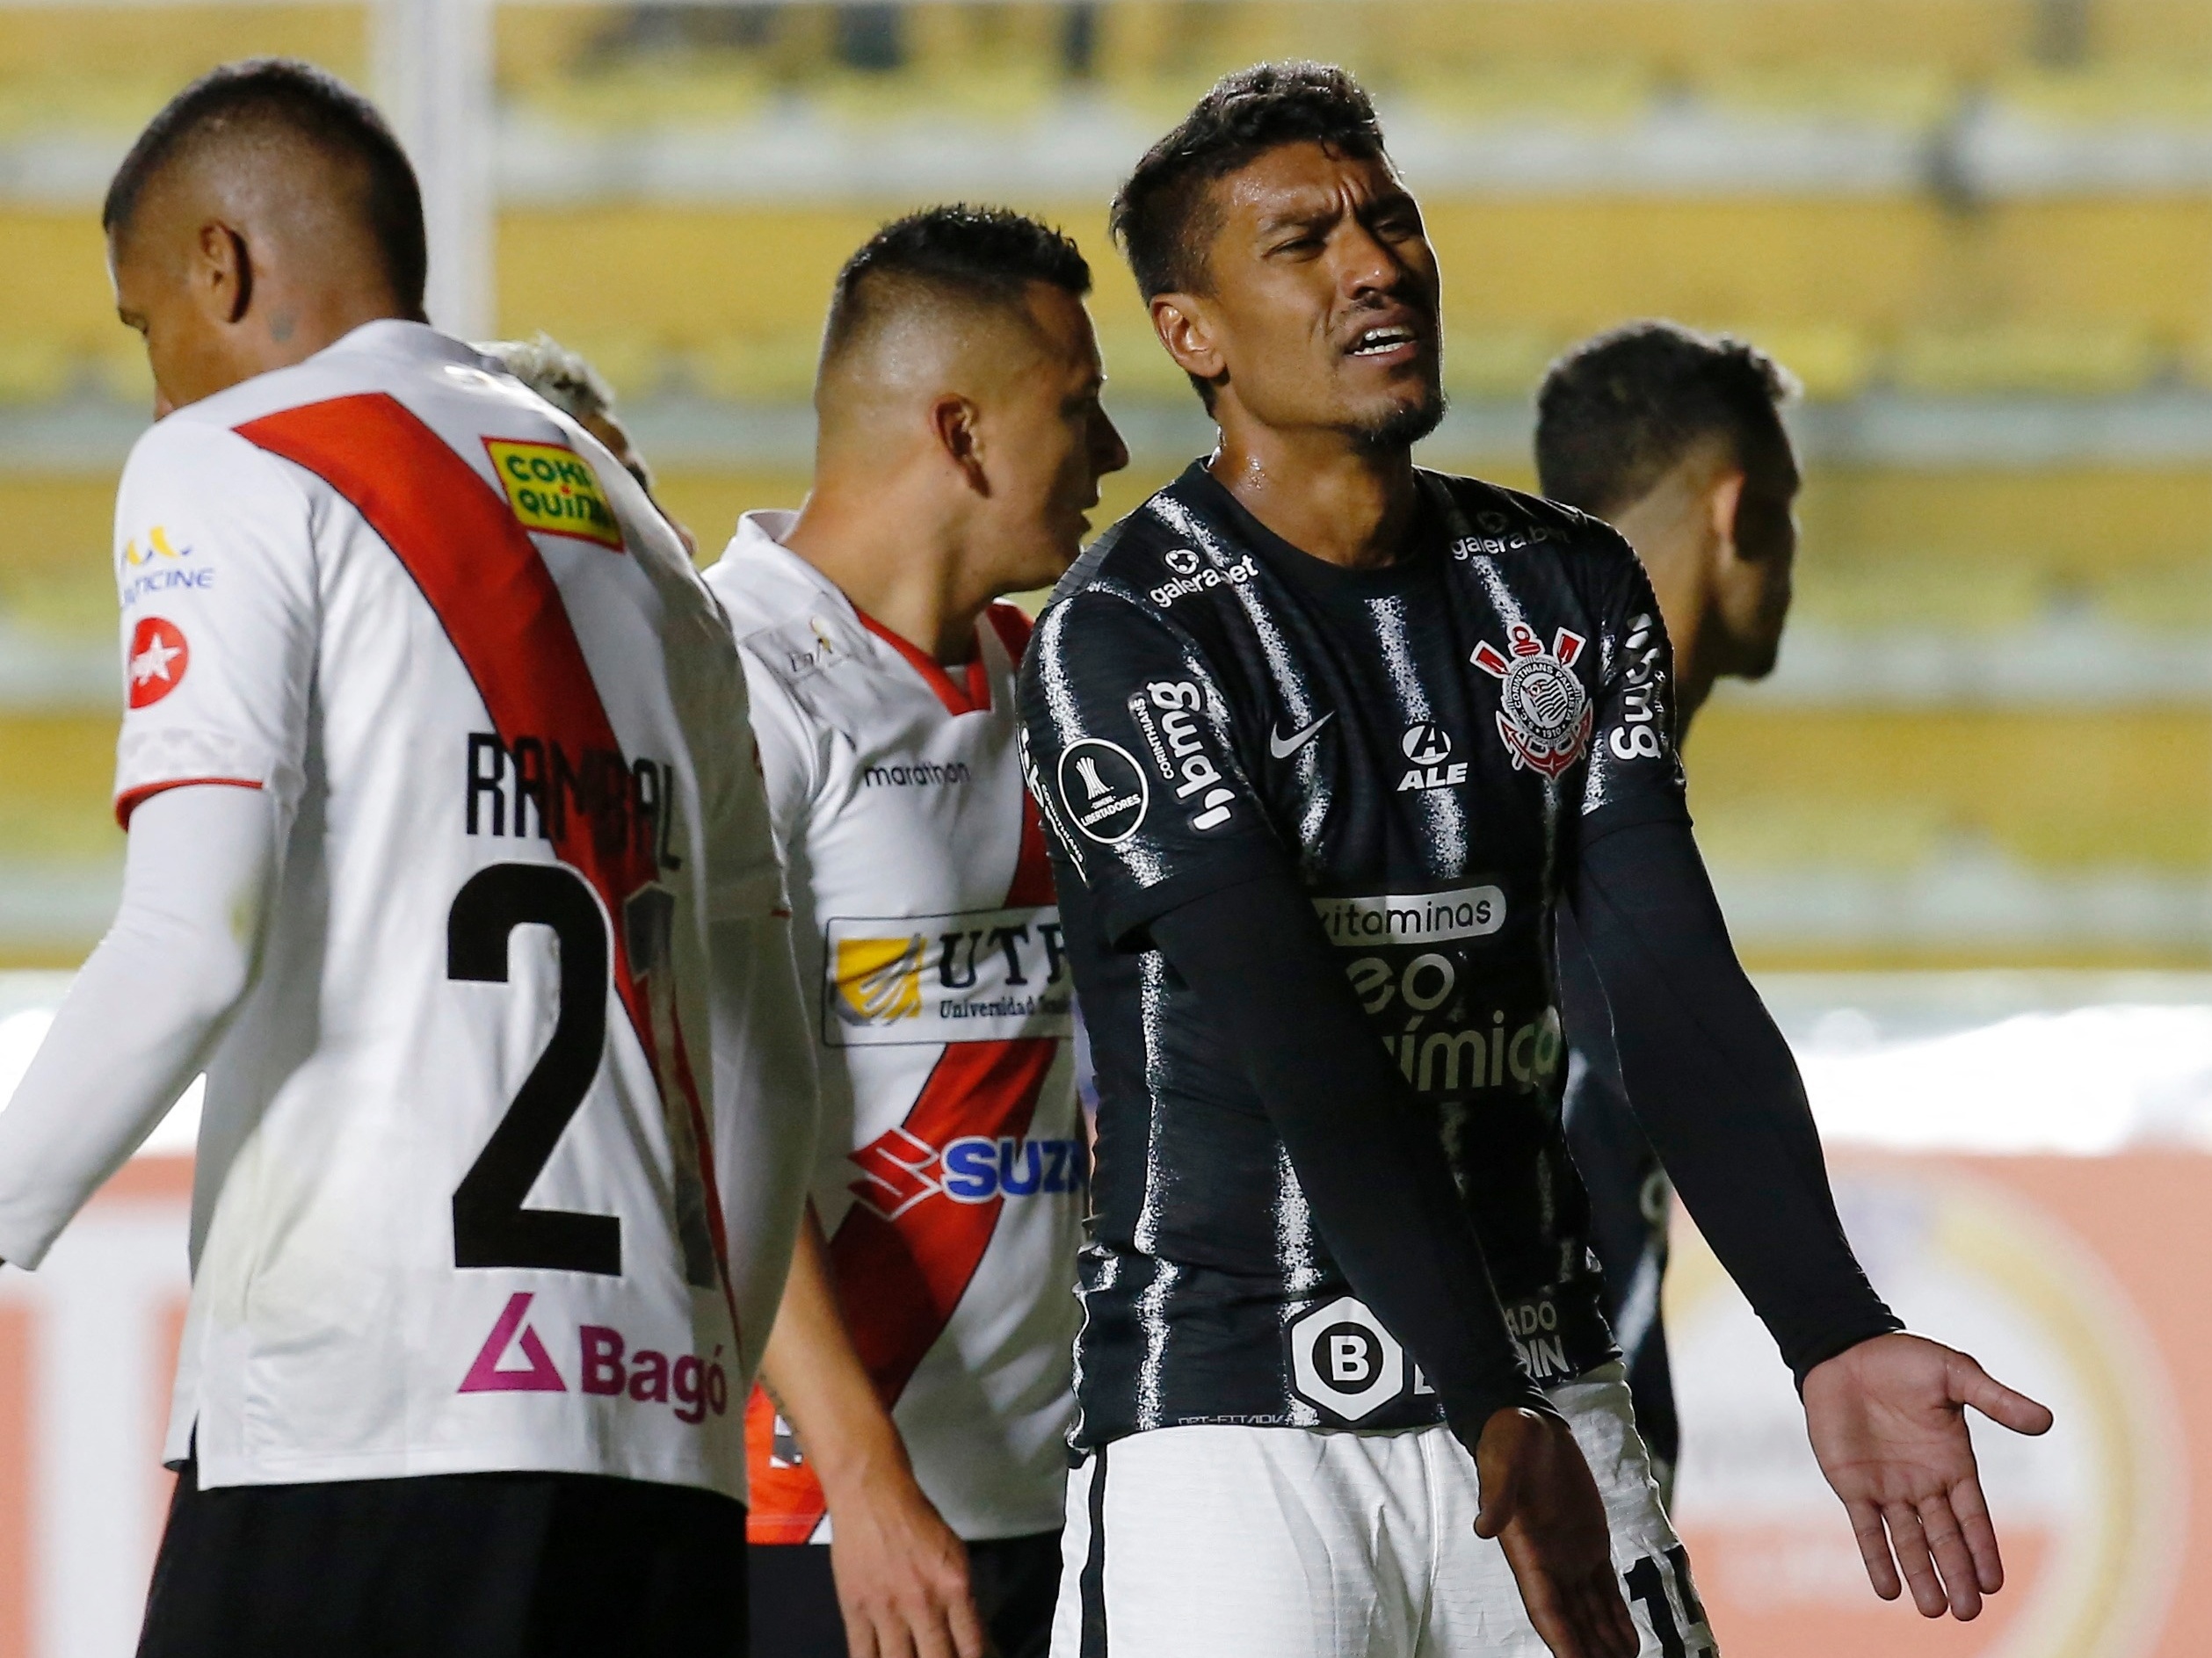 Corinthians x Always Ready: prováveis times, desfalques e onde assistir -  Lance!